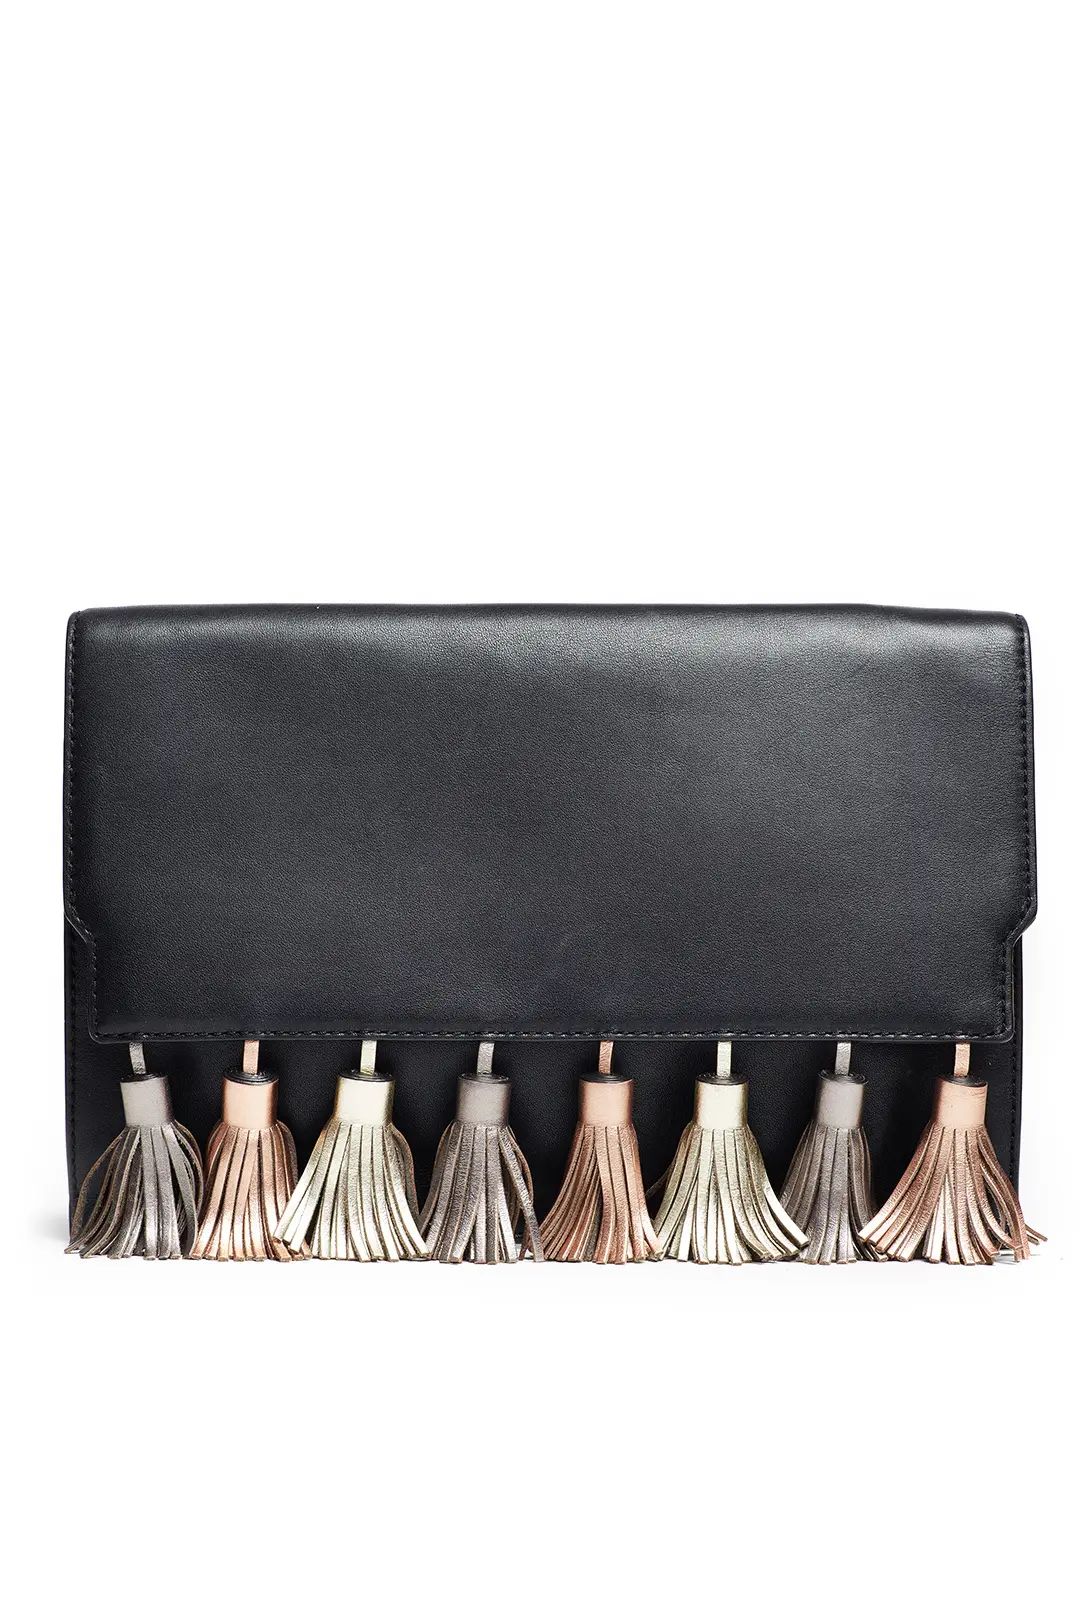 Rebecca Minkoff Handbags Metallic Tassel Sofia Clutch | Rent The Runway